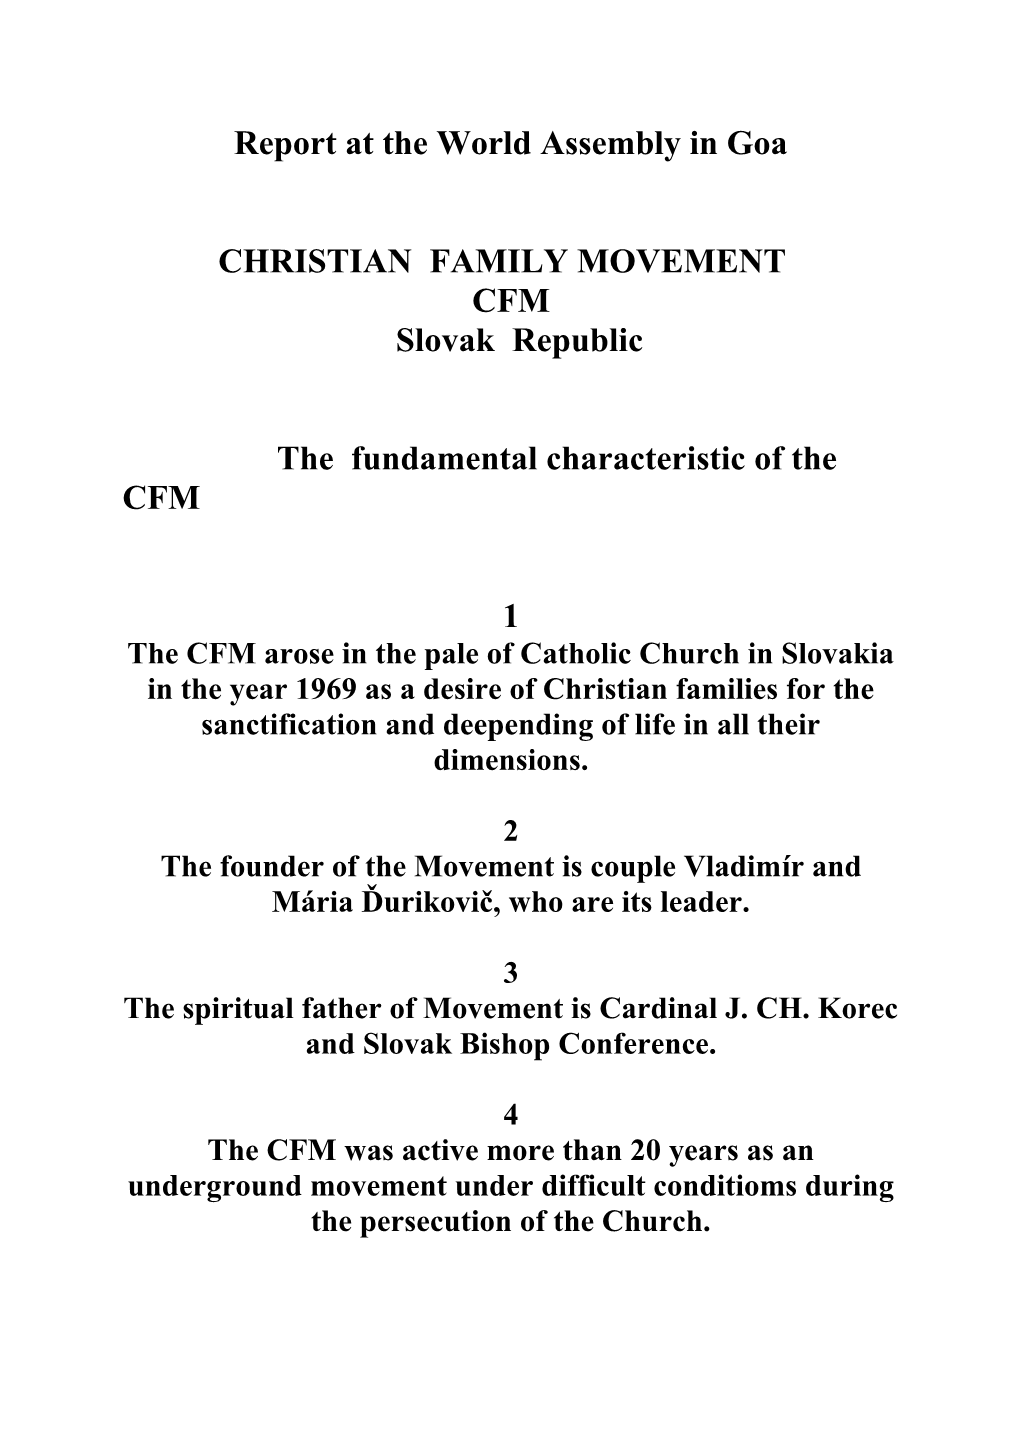 Christian Family Movement